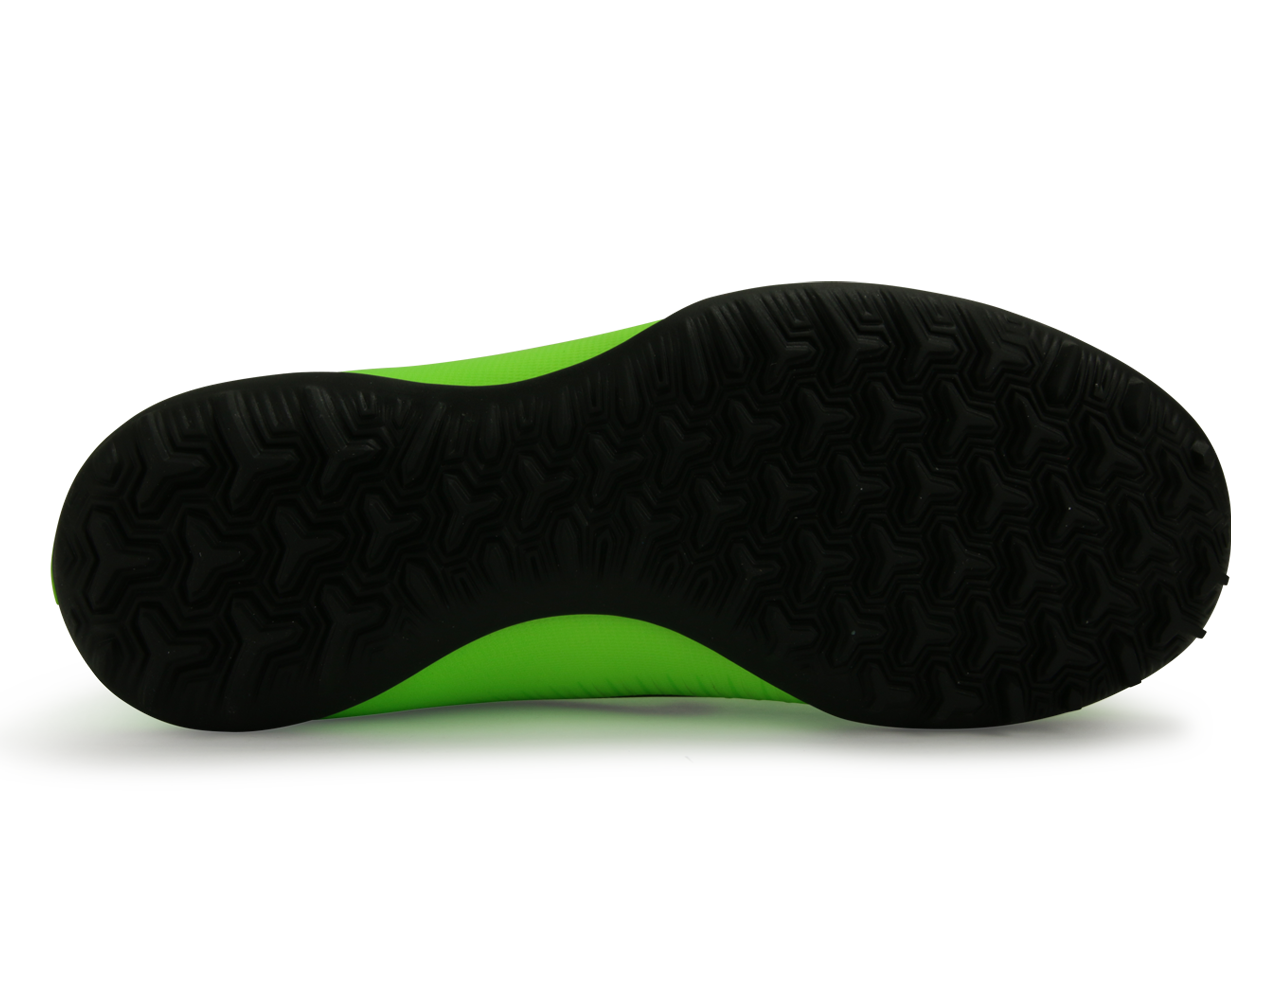 Nike Kids MercurialX Victory VI Turf Soccer Shoes Electric Green/Black/Flash Lime